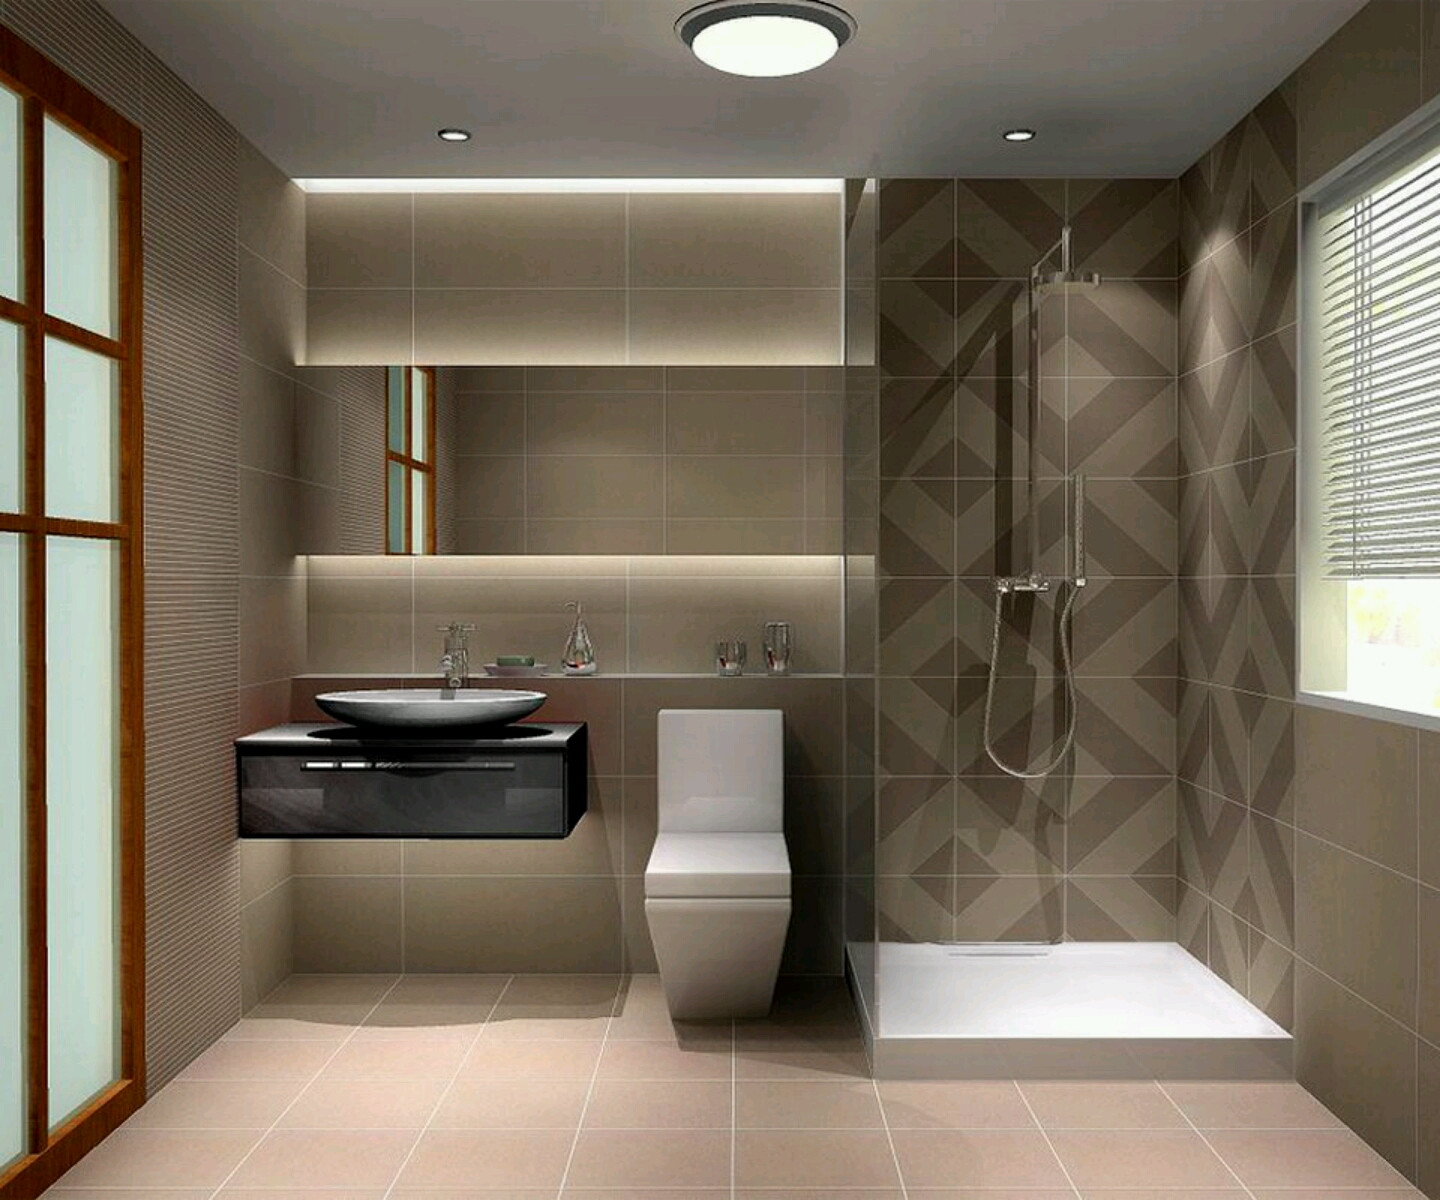 Best ideas about Modern Bathroom Designs
. Save or Pin Modern bathrooms designs pictures Furniture Gallery Now.